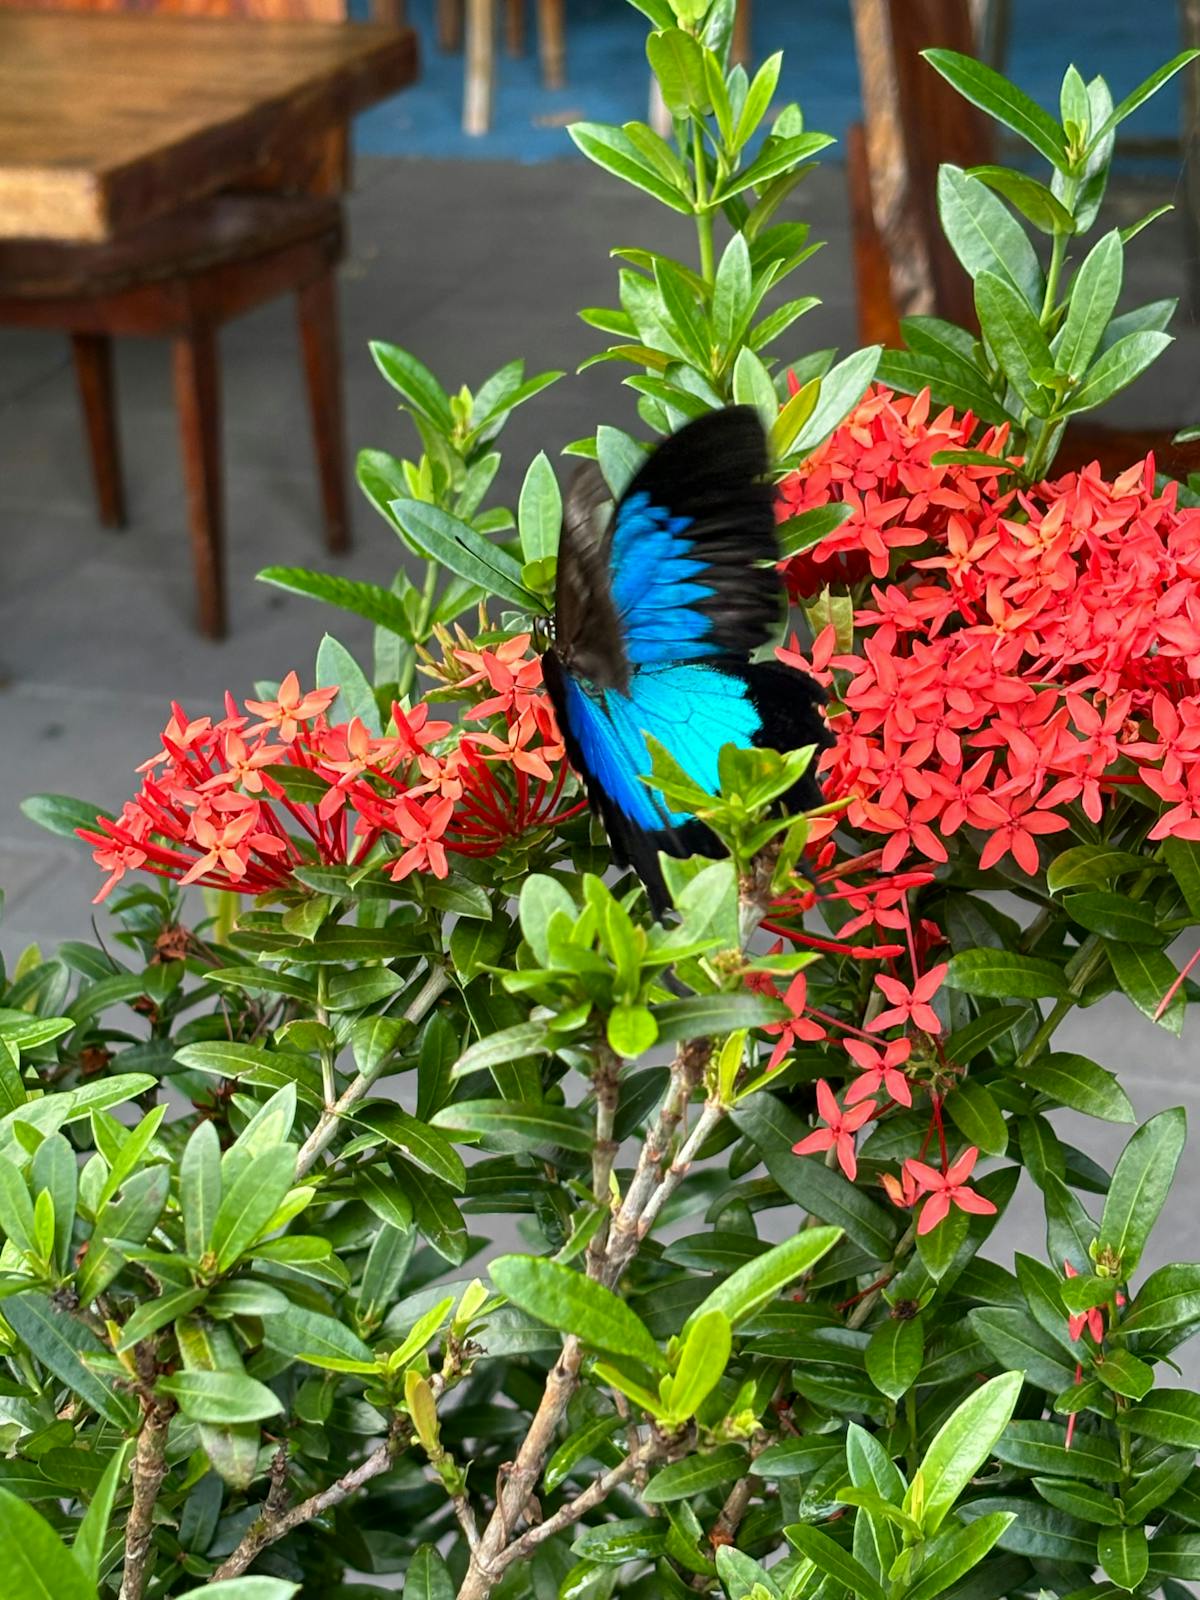 Daintree Siesta Restaurant Ulysses Butterfly on red flowers